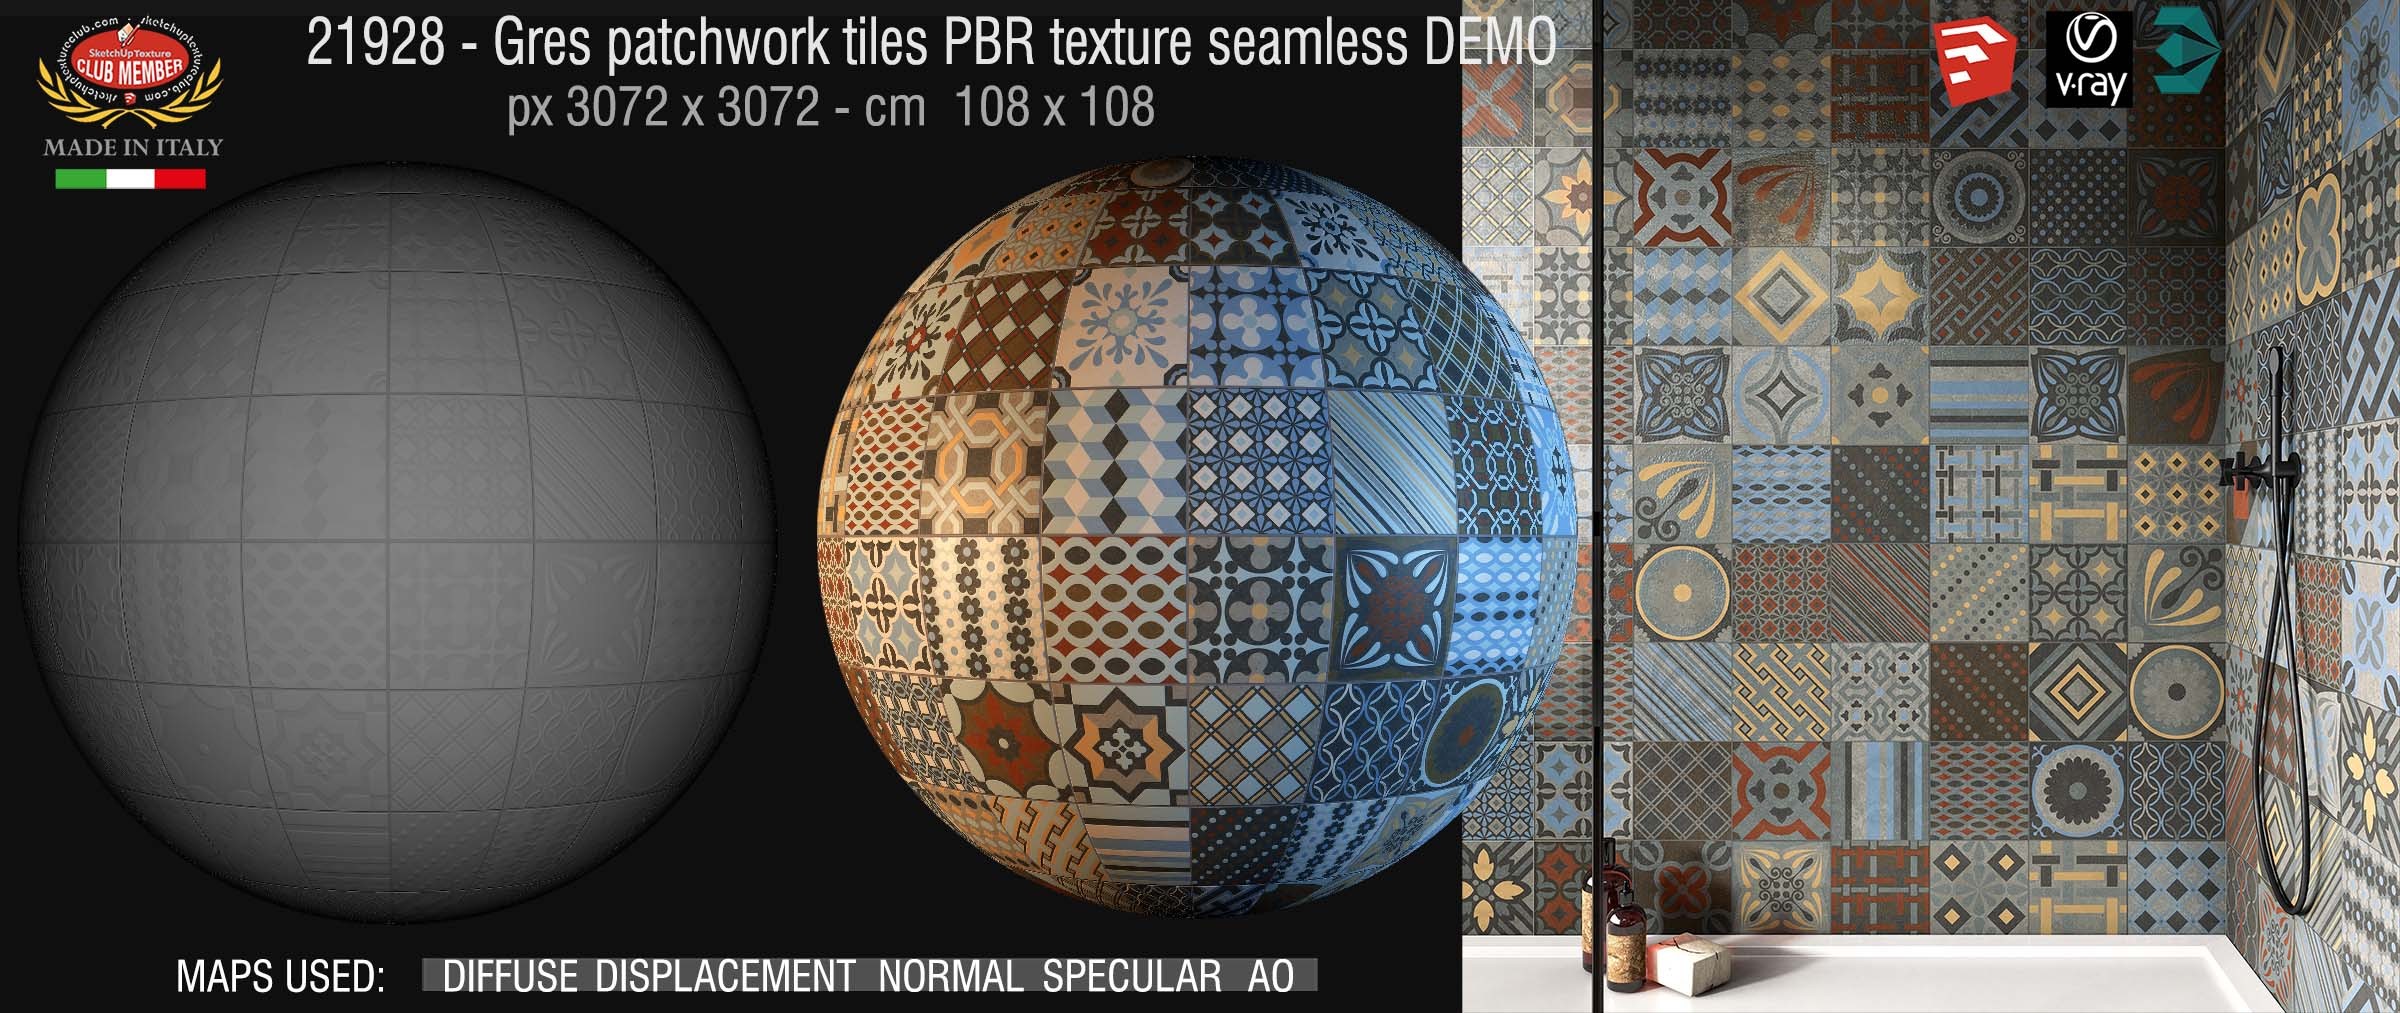 21928 gres patchwork tiles PBR texture seamless DEMO